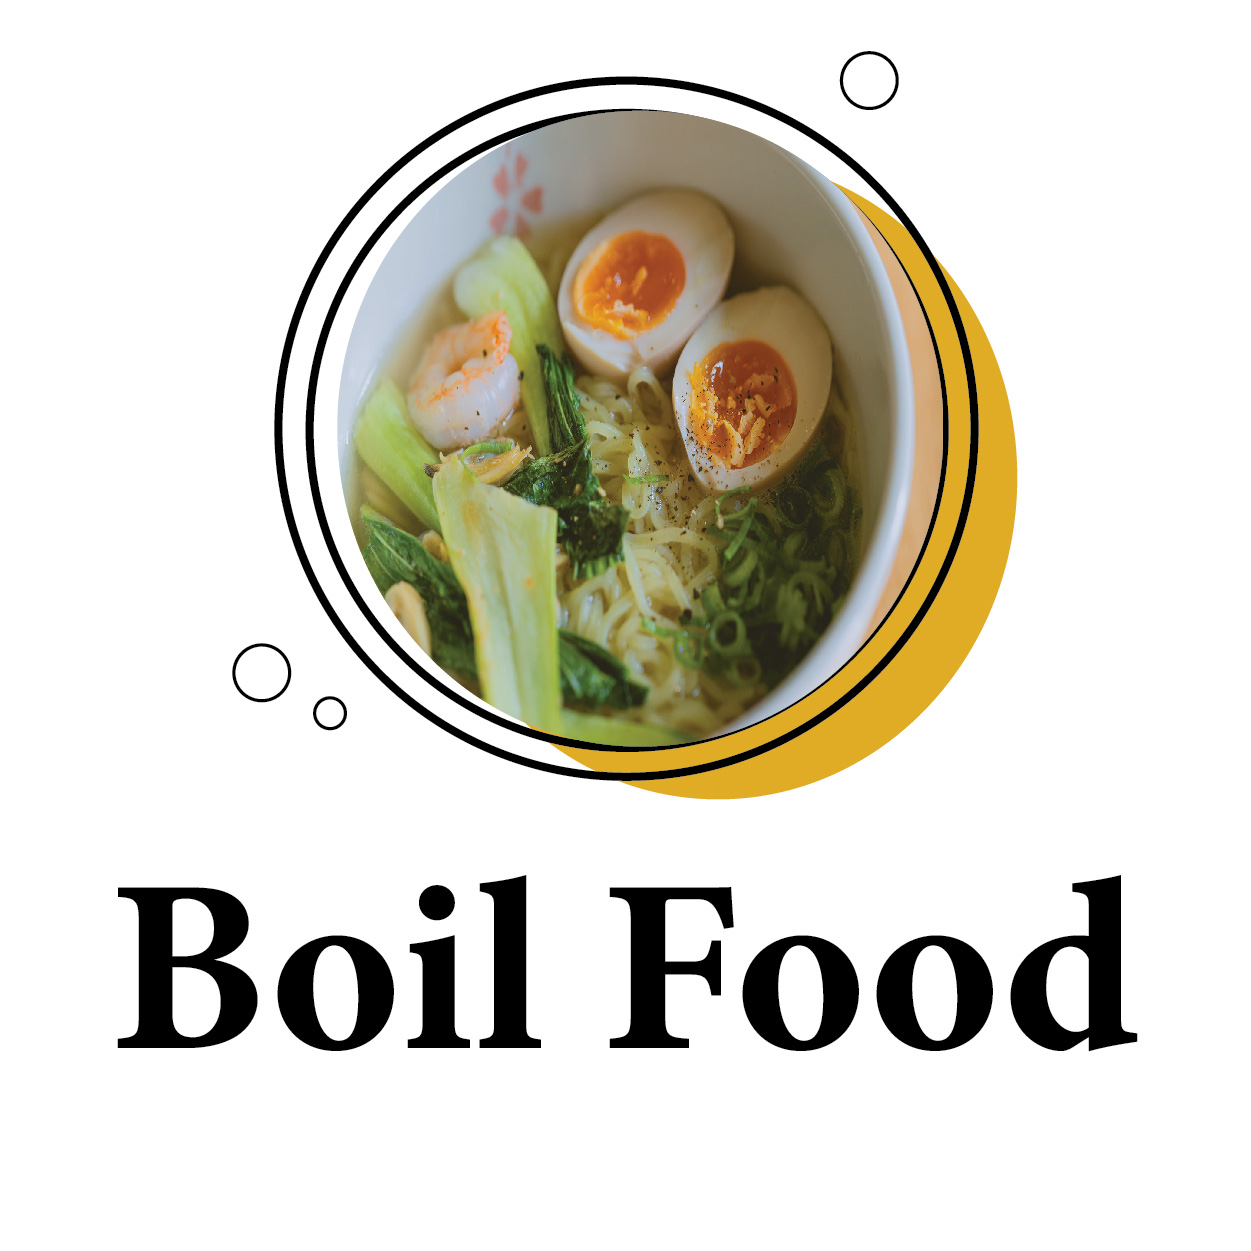 Boil food